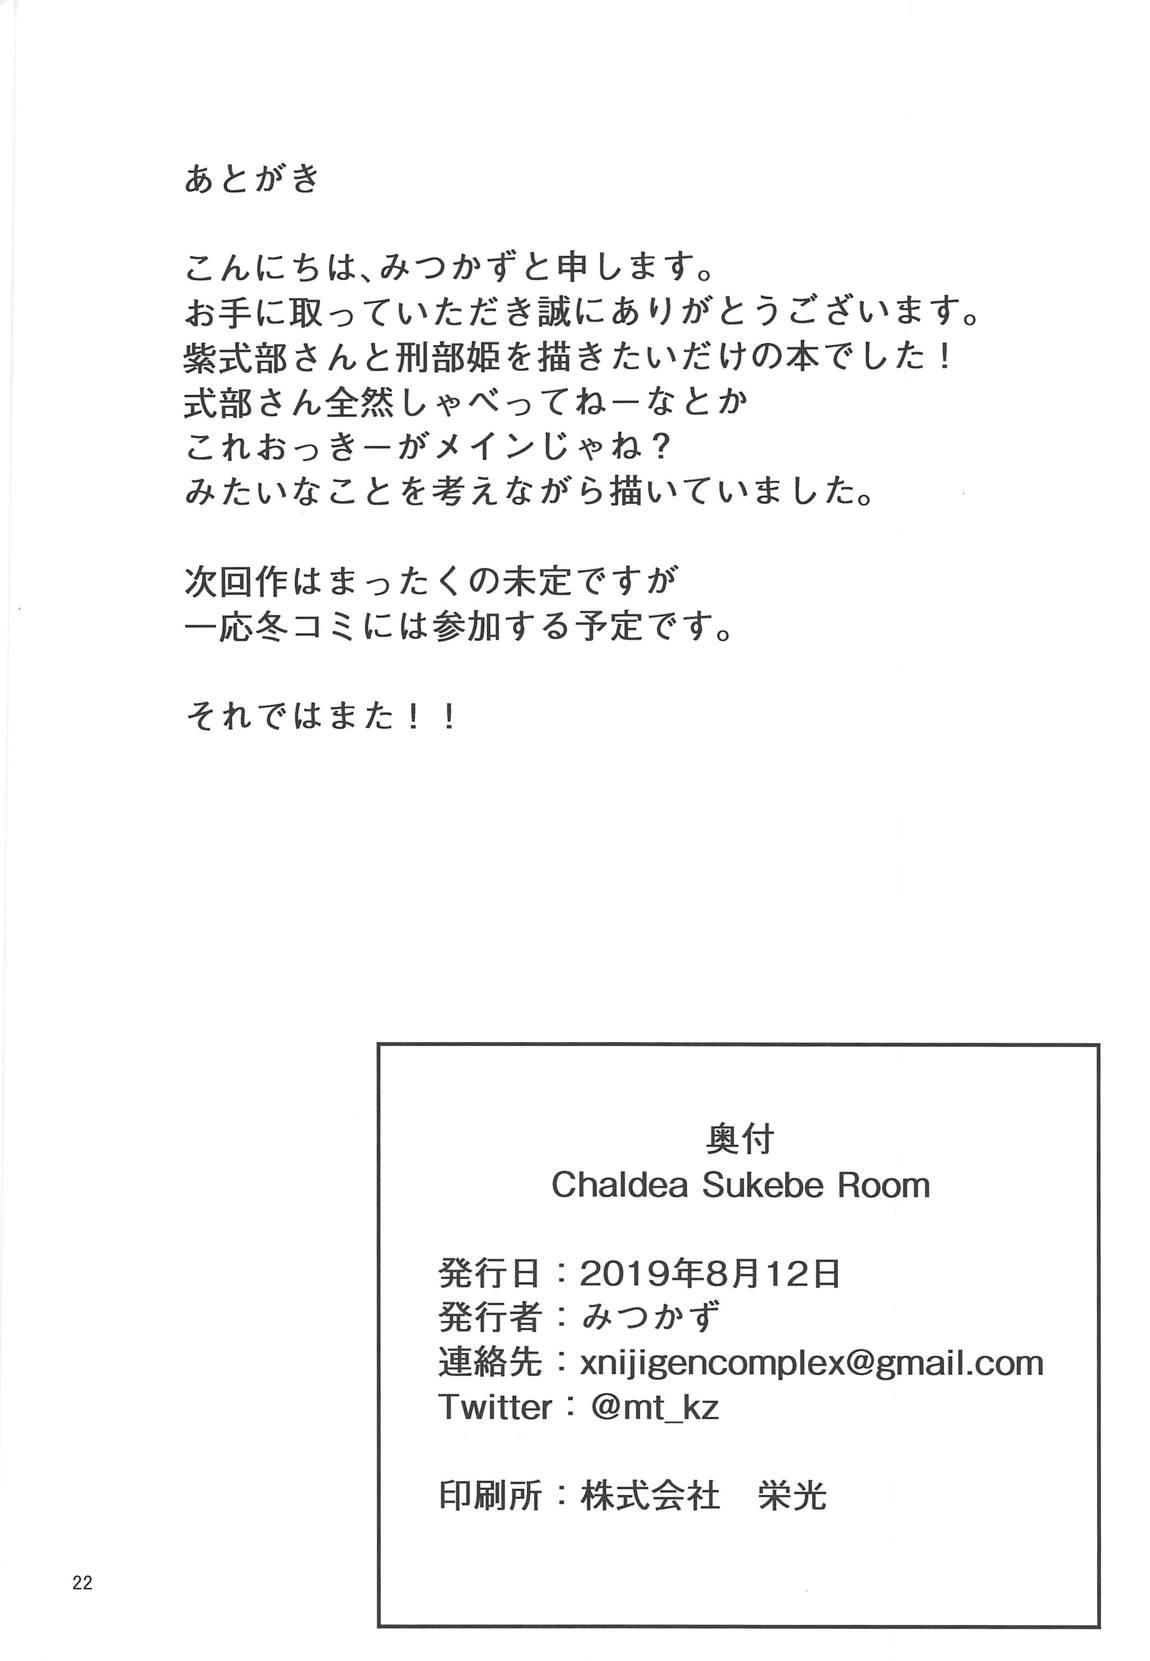 Chaldea Sukebe Room 19